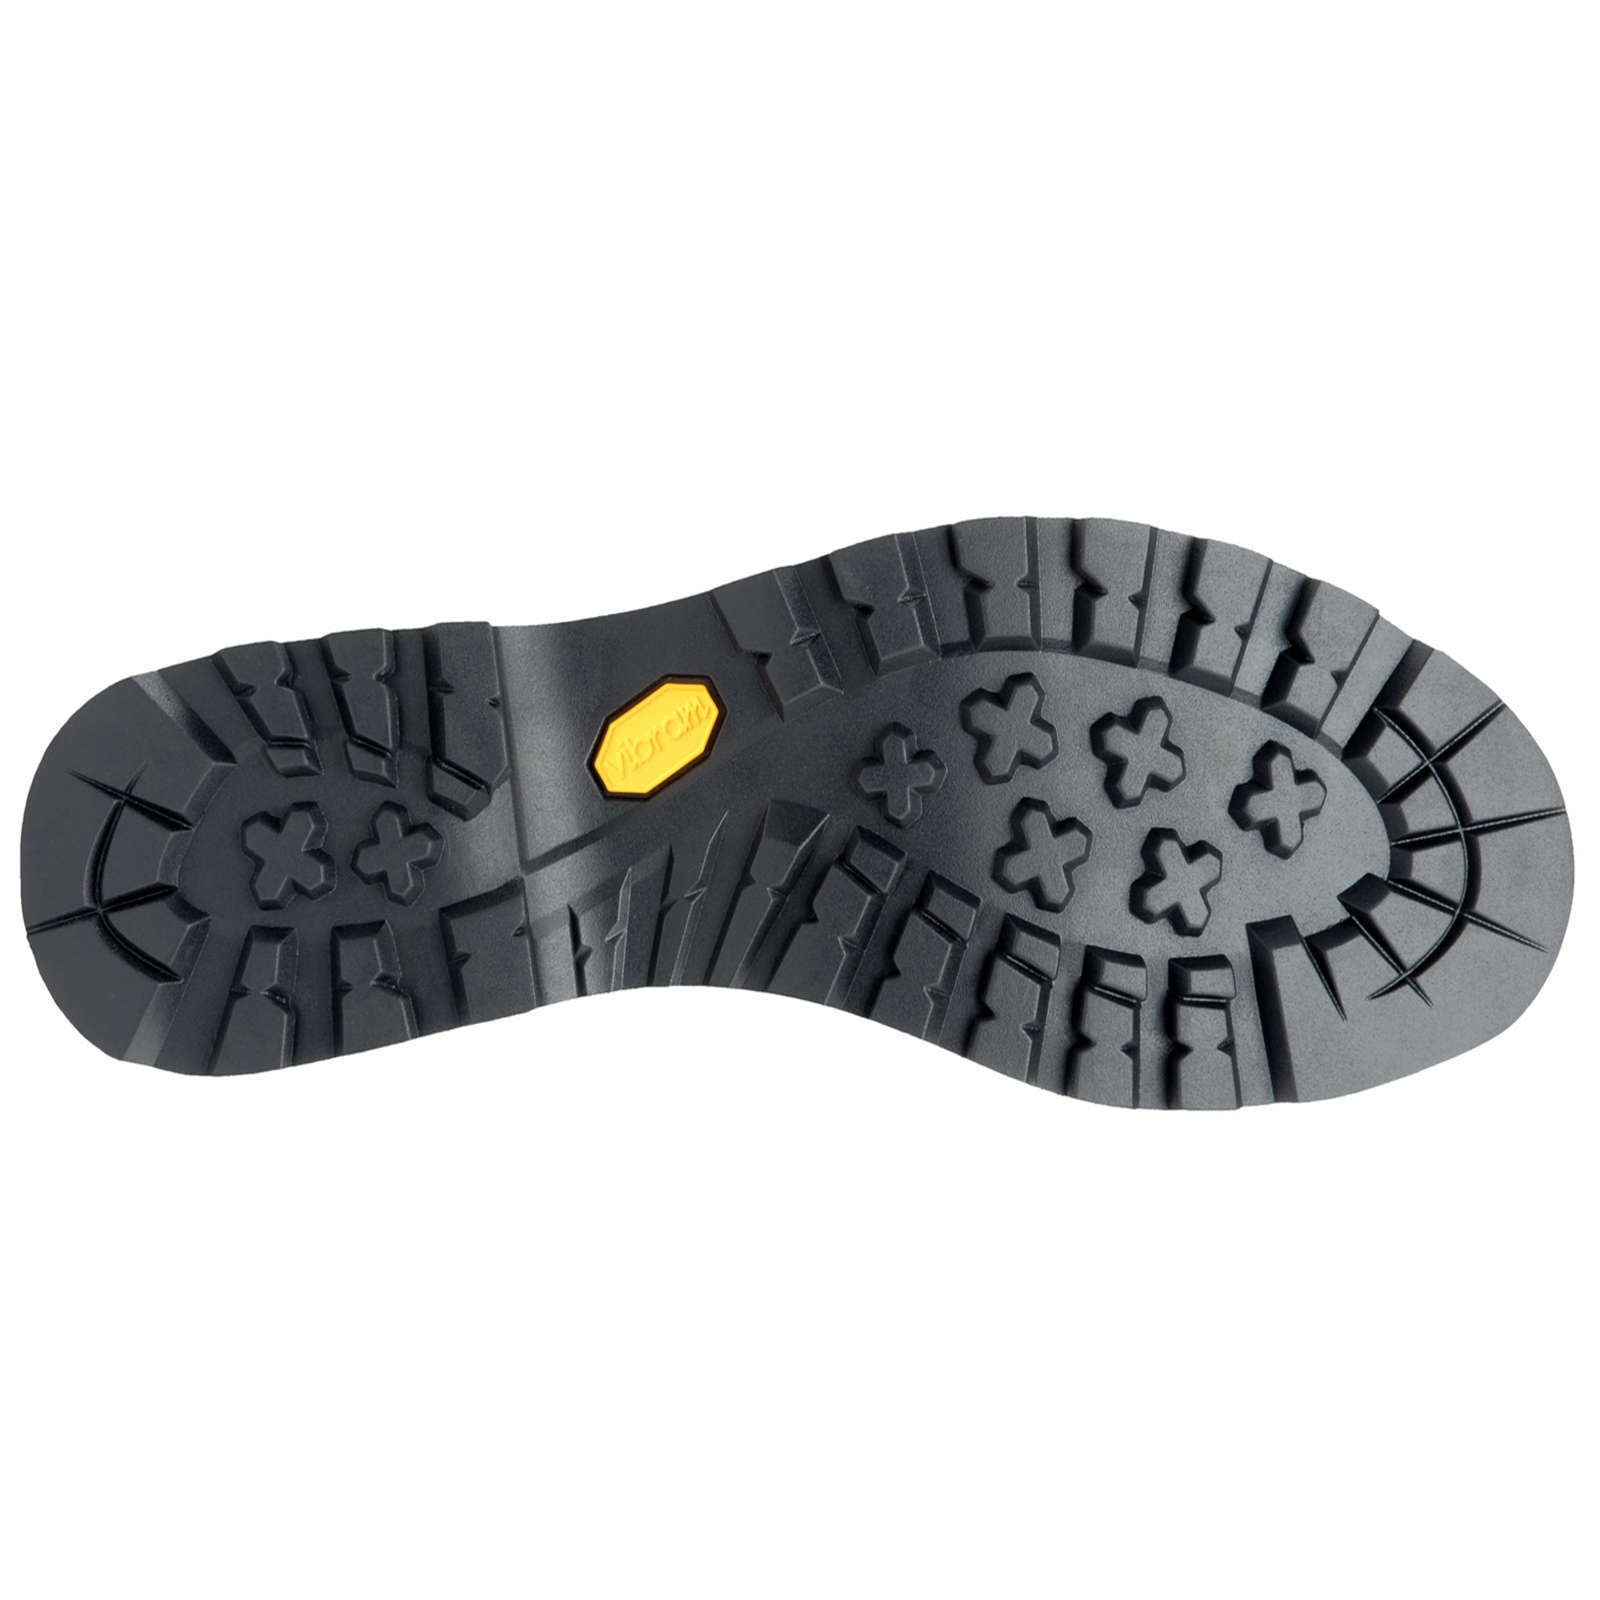 Zamberlan 1000 Baltoro GTX Suede Leather Men's Waterproof Hiking Boots#color_graphite black